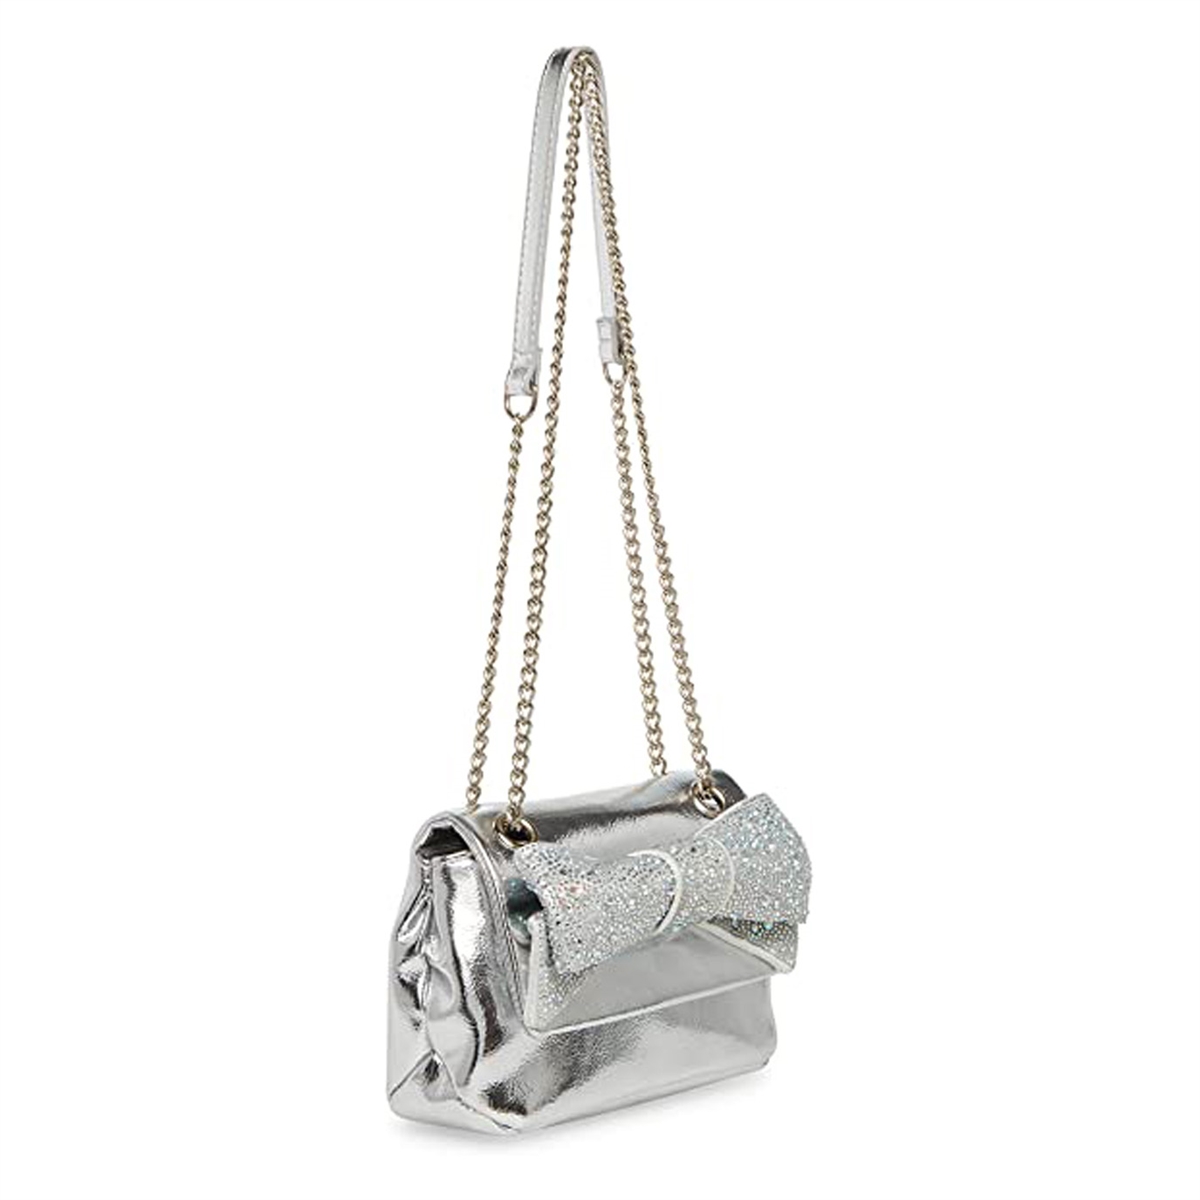 Bewaltz - Silver - Fancy Glitter Crossbody Purse with Chain Strap